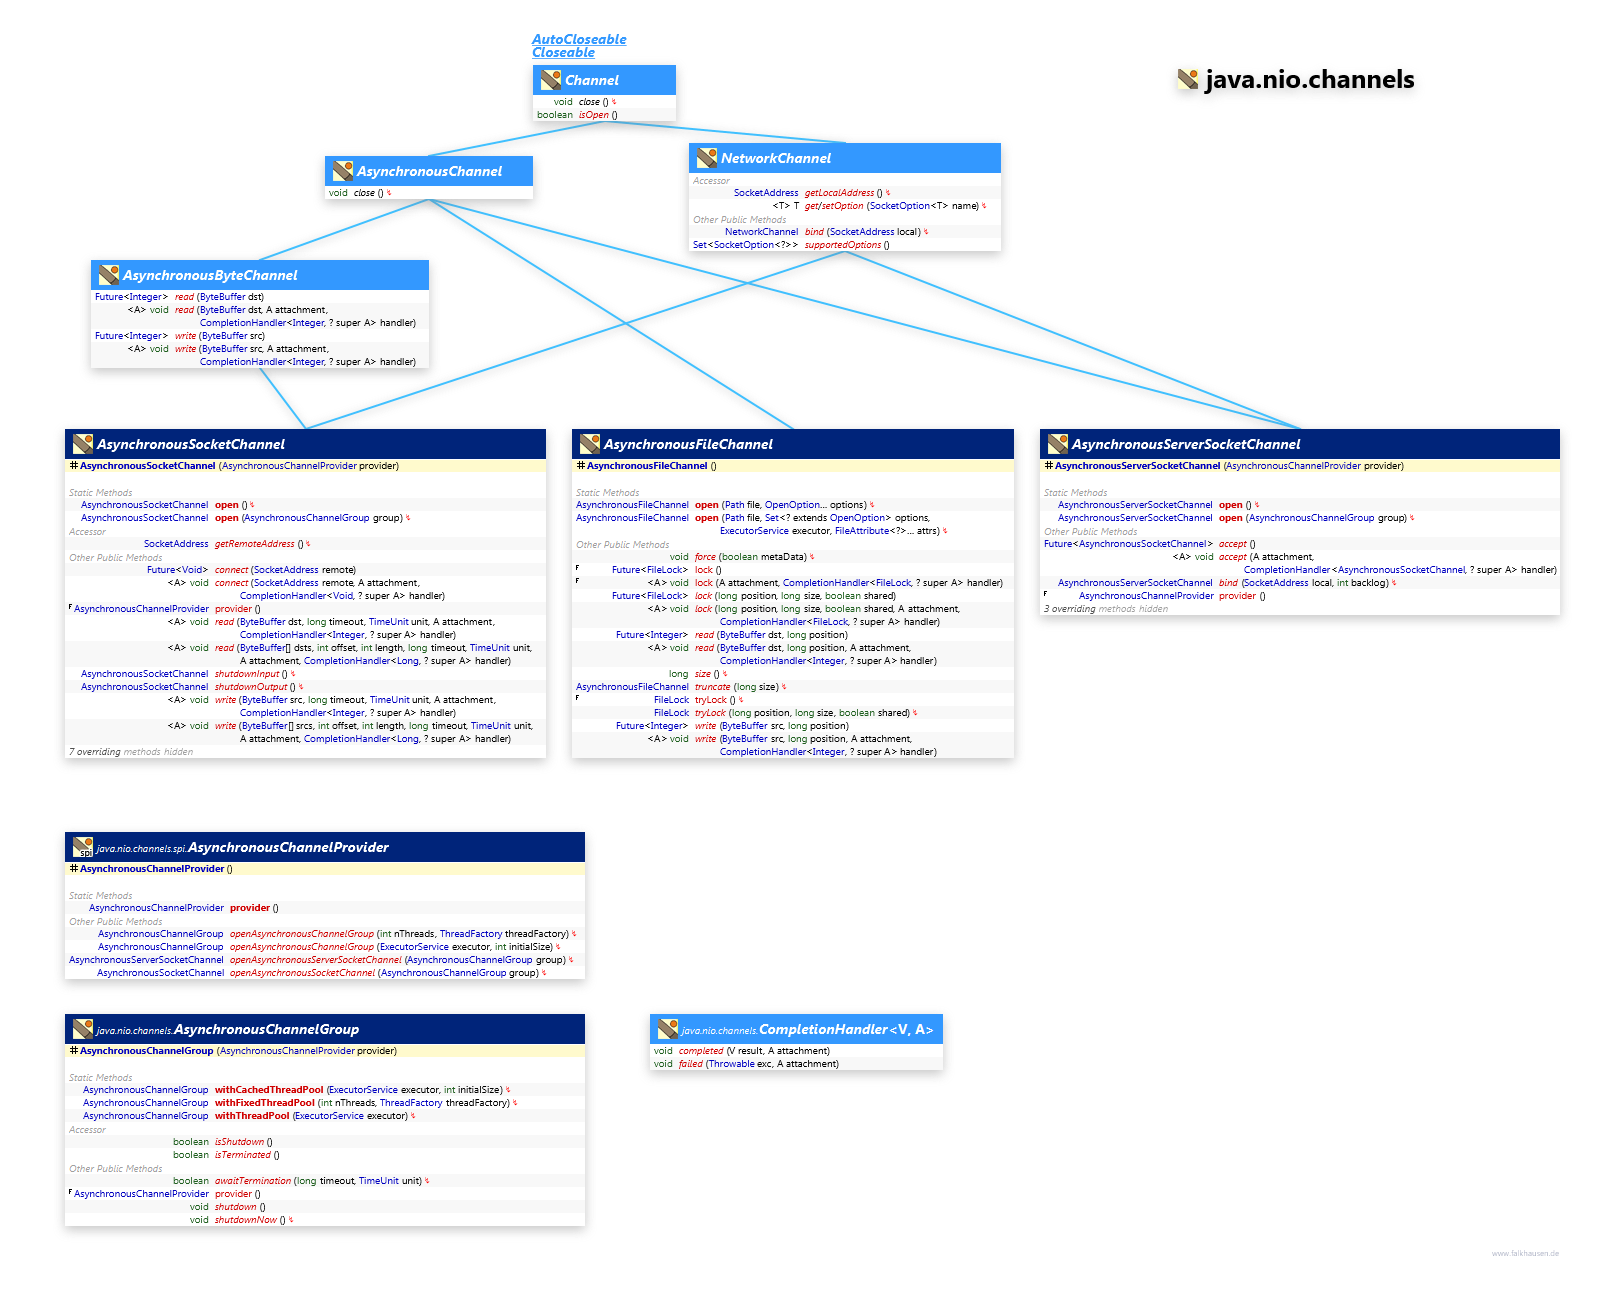 java.nio.channels AsynchronousChannel class diagram and api documentation for Java 8